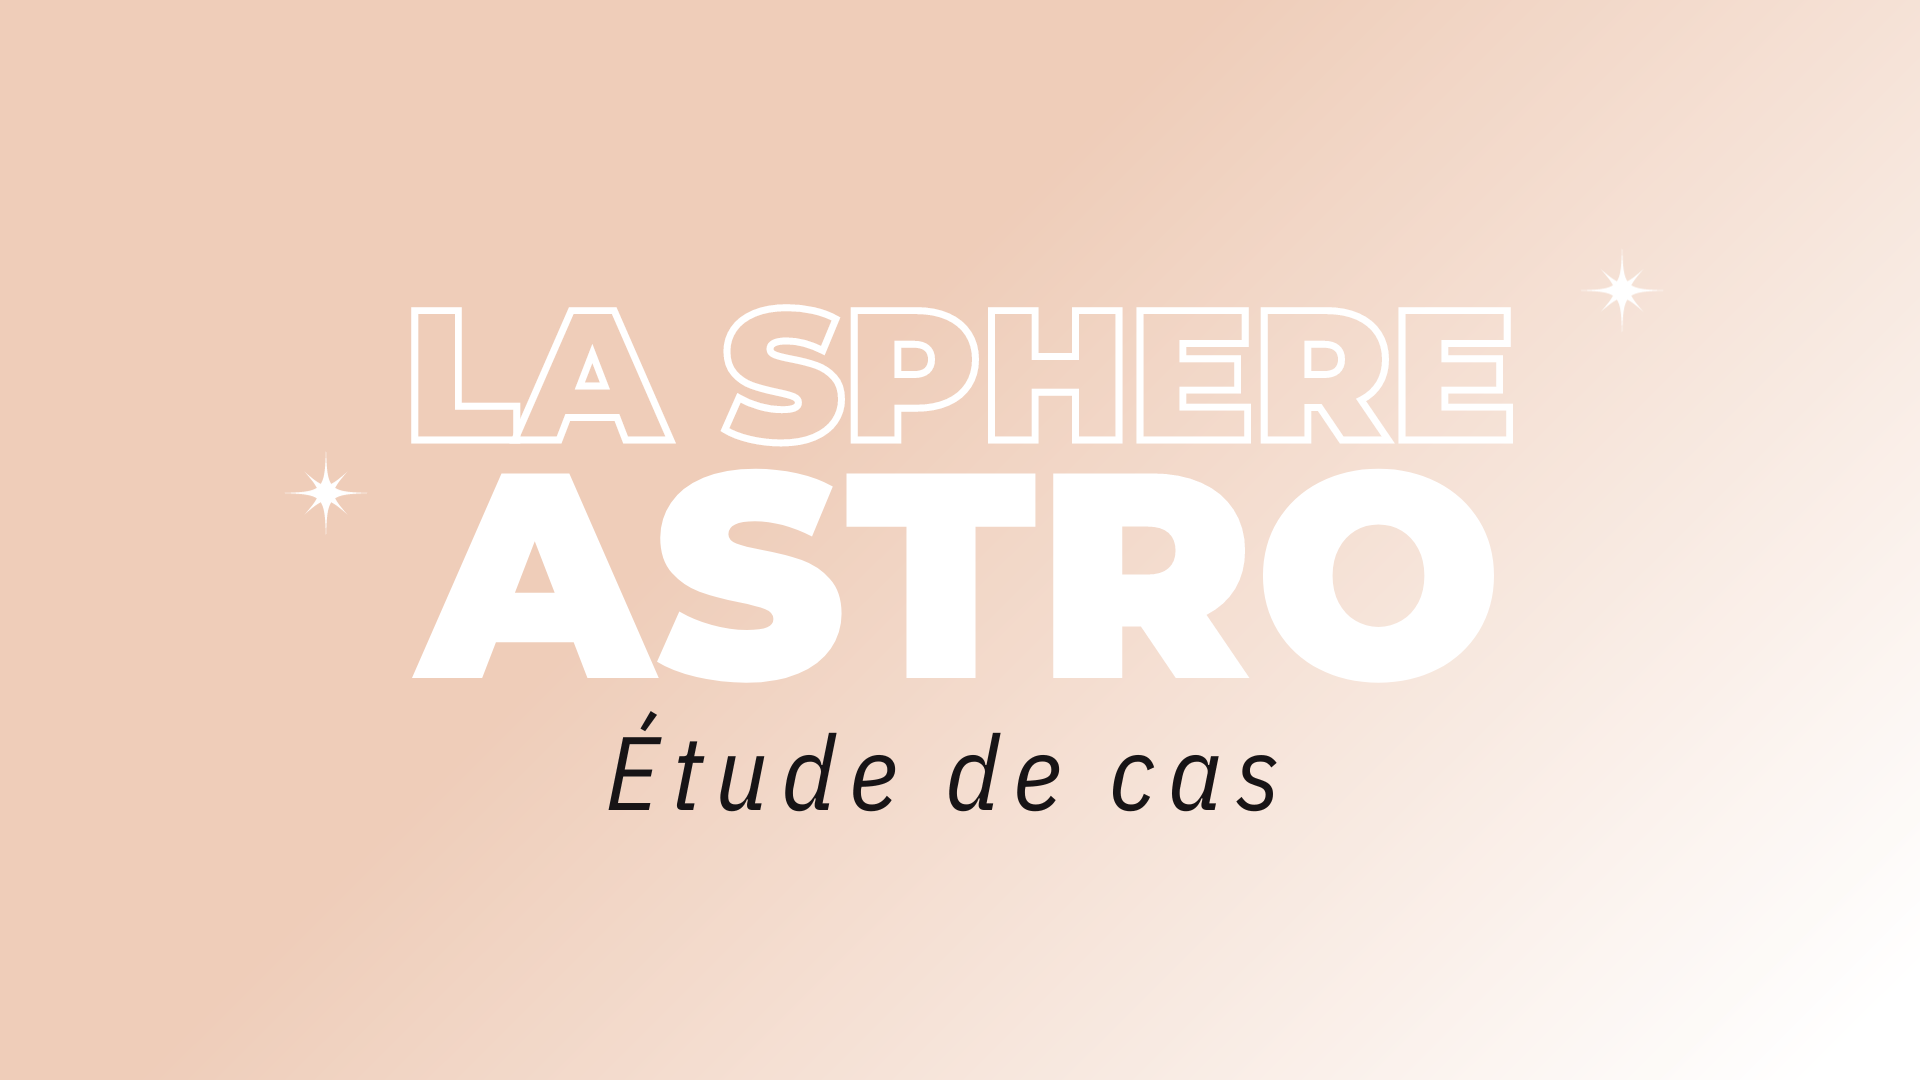 etudedecas-theme-astral-josephine-baker-podcast